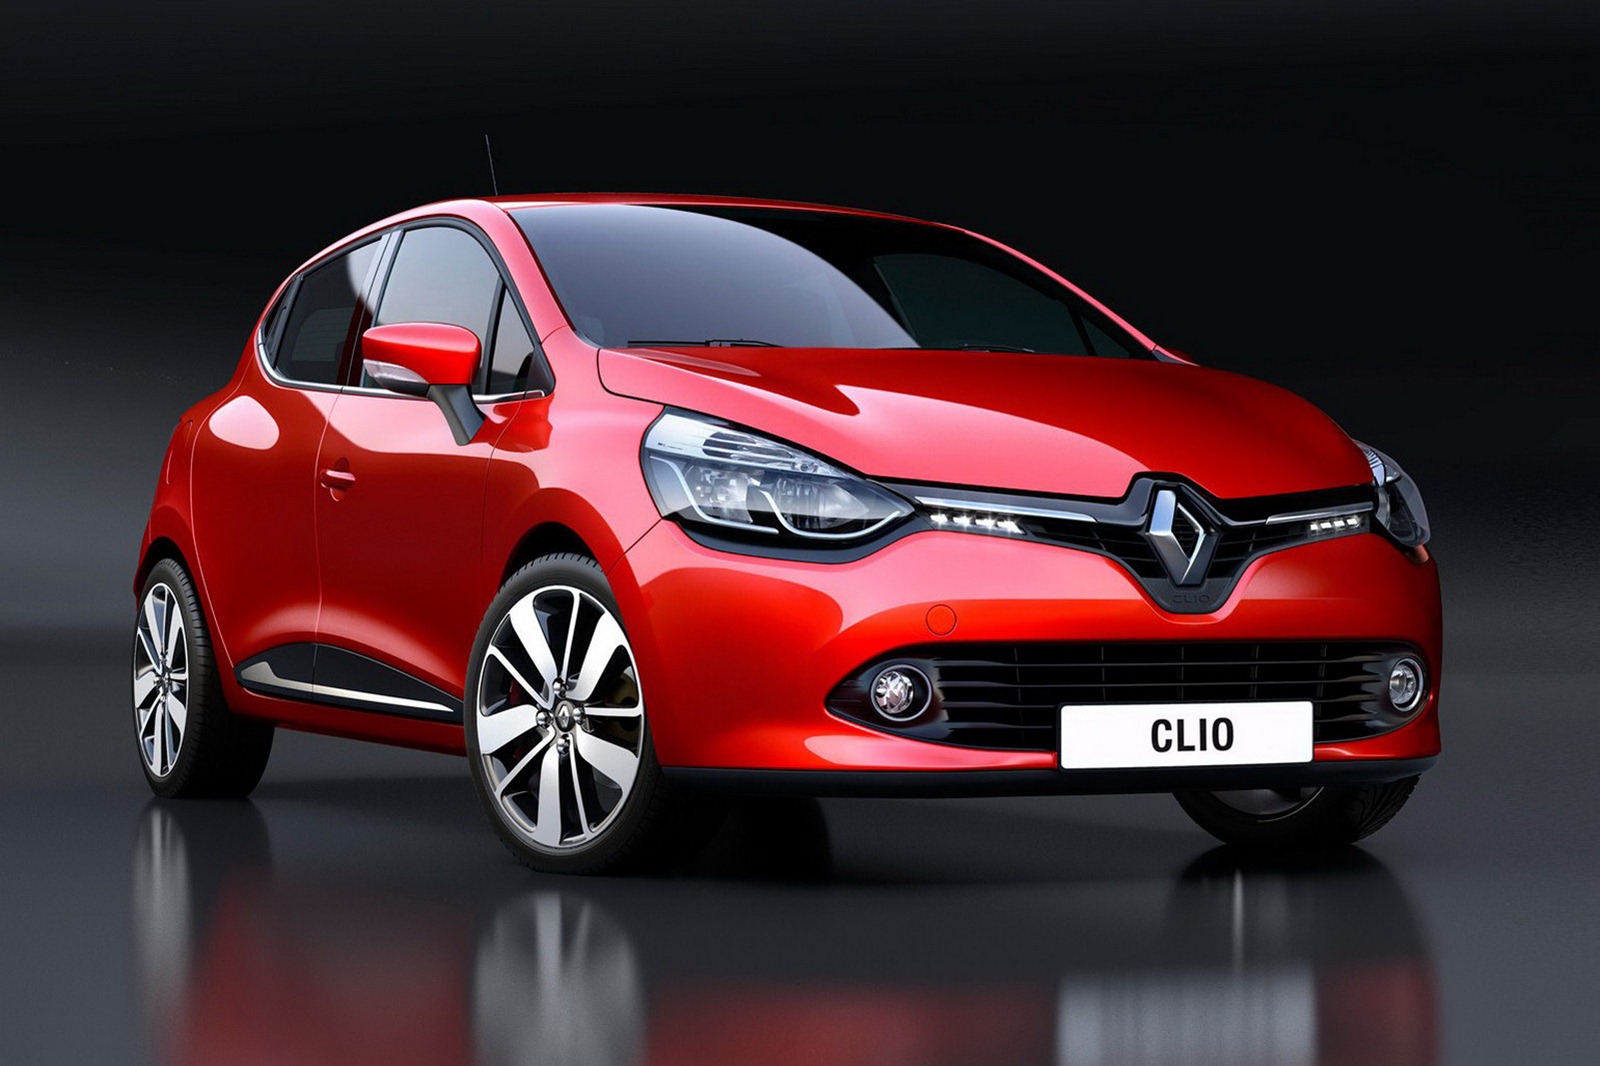 The new Renault Clio